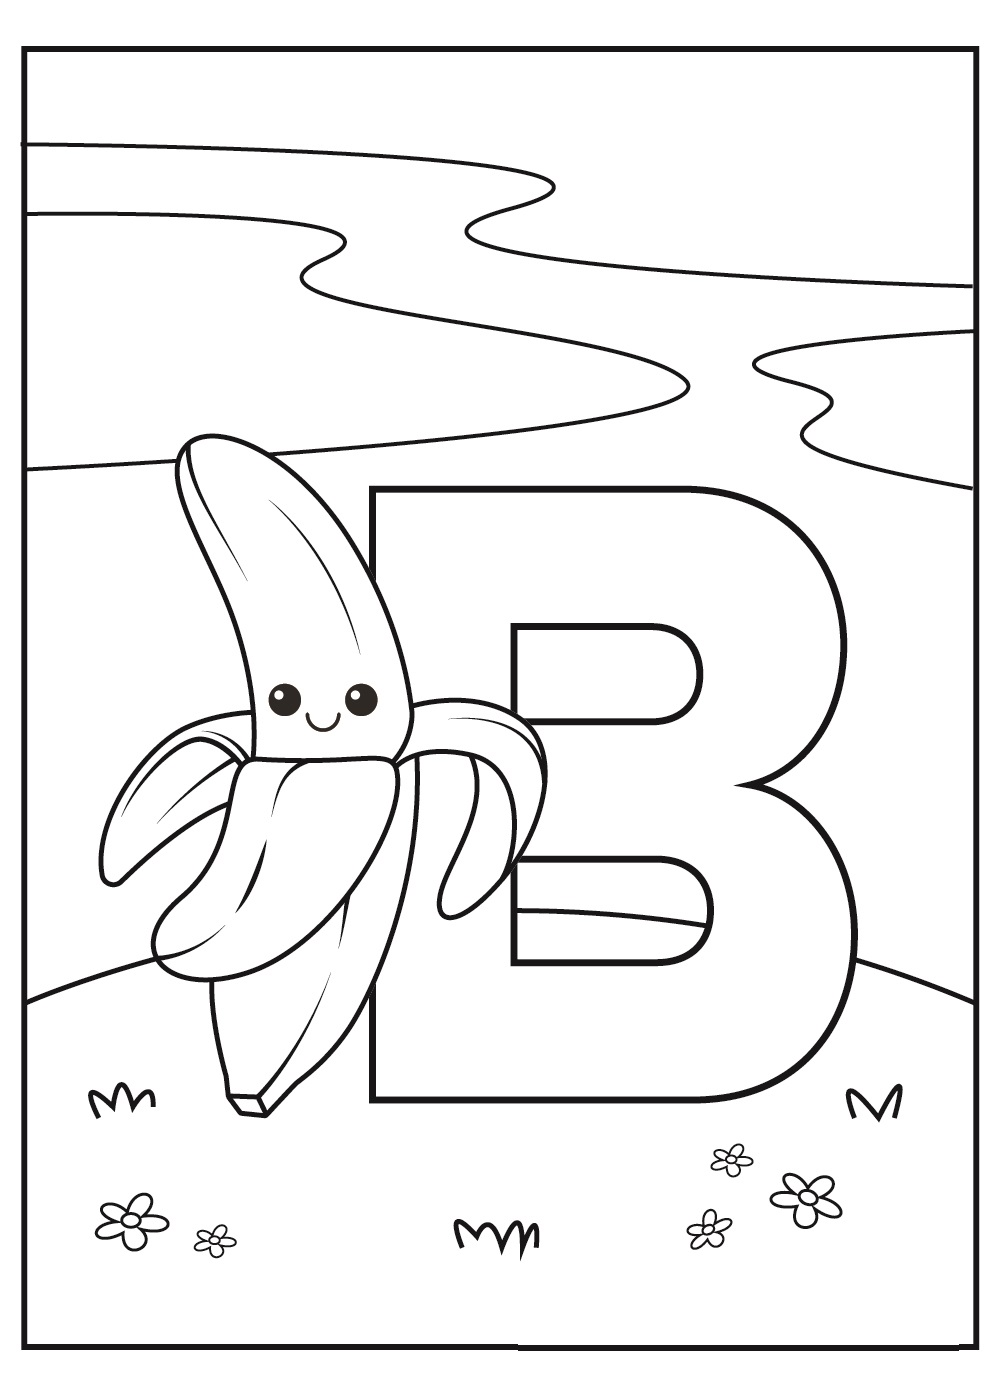 Cute Banana Image For You